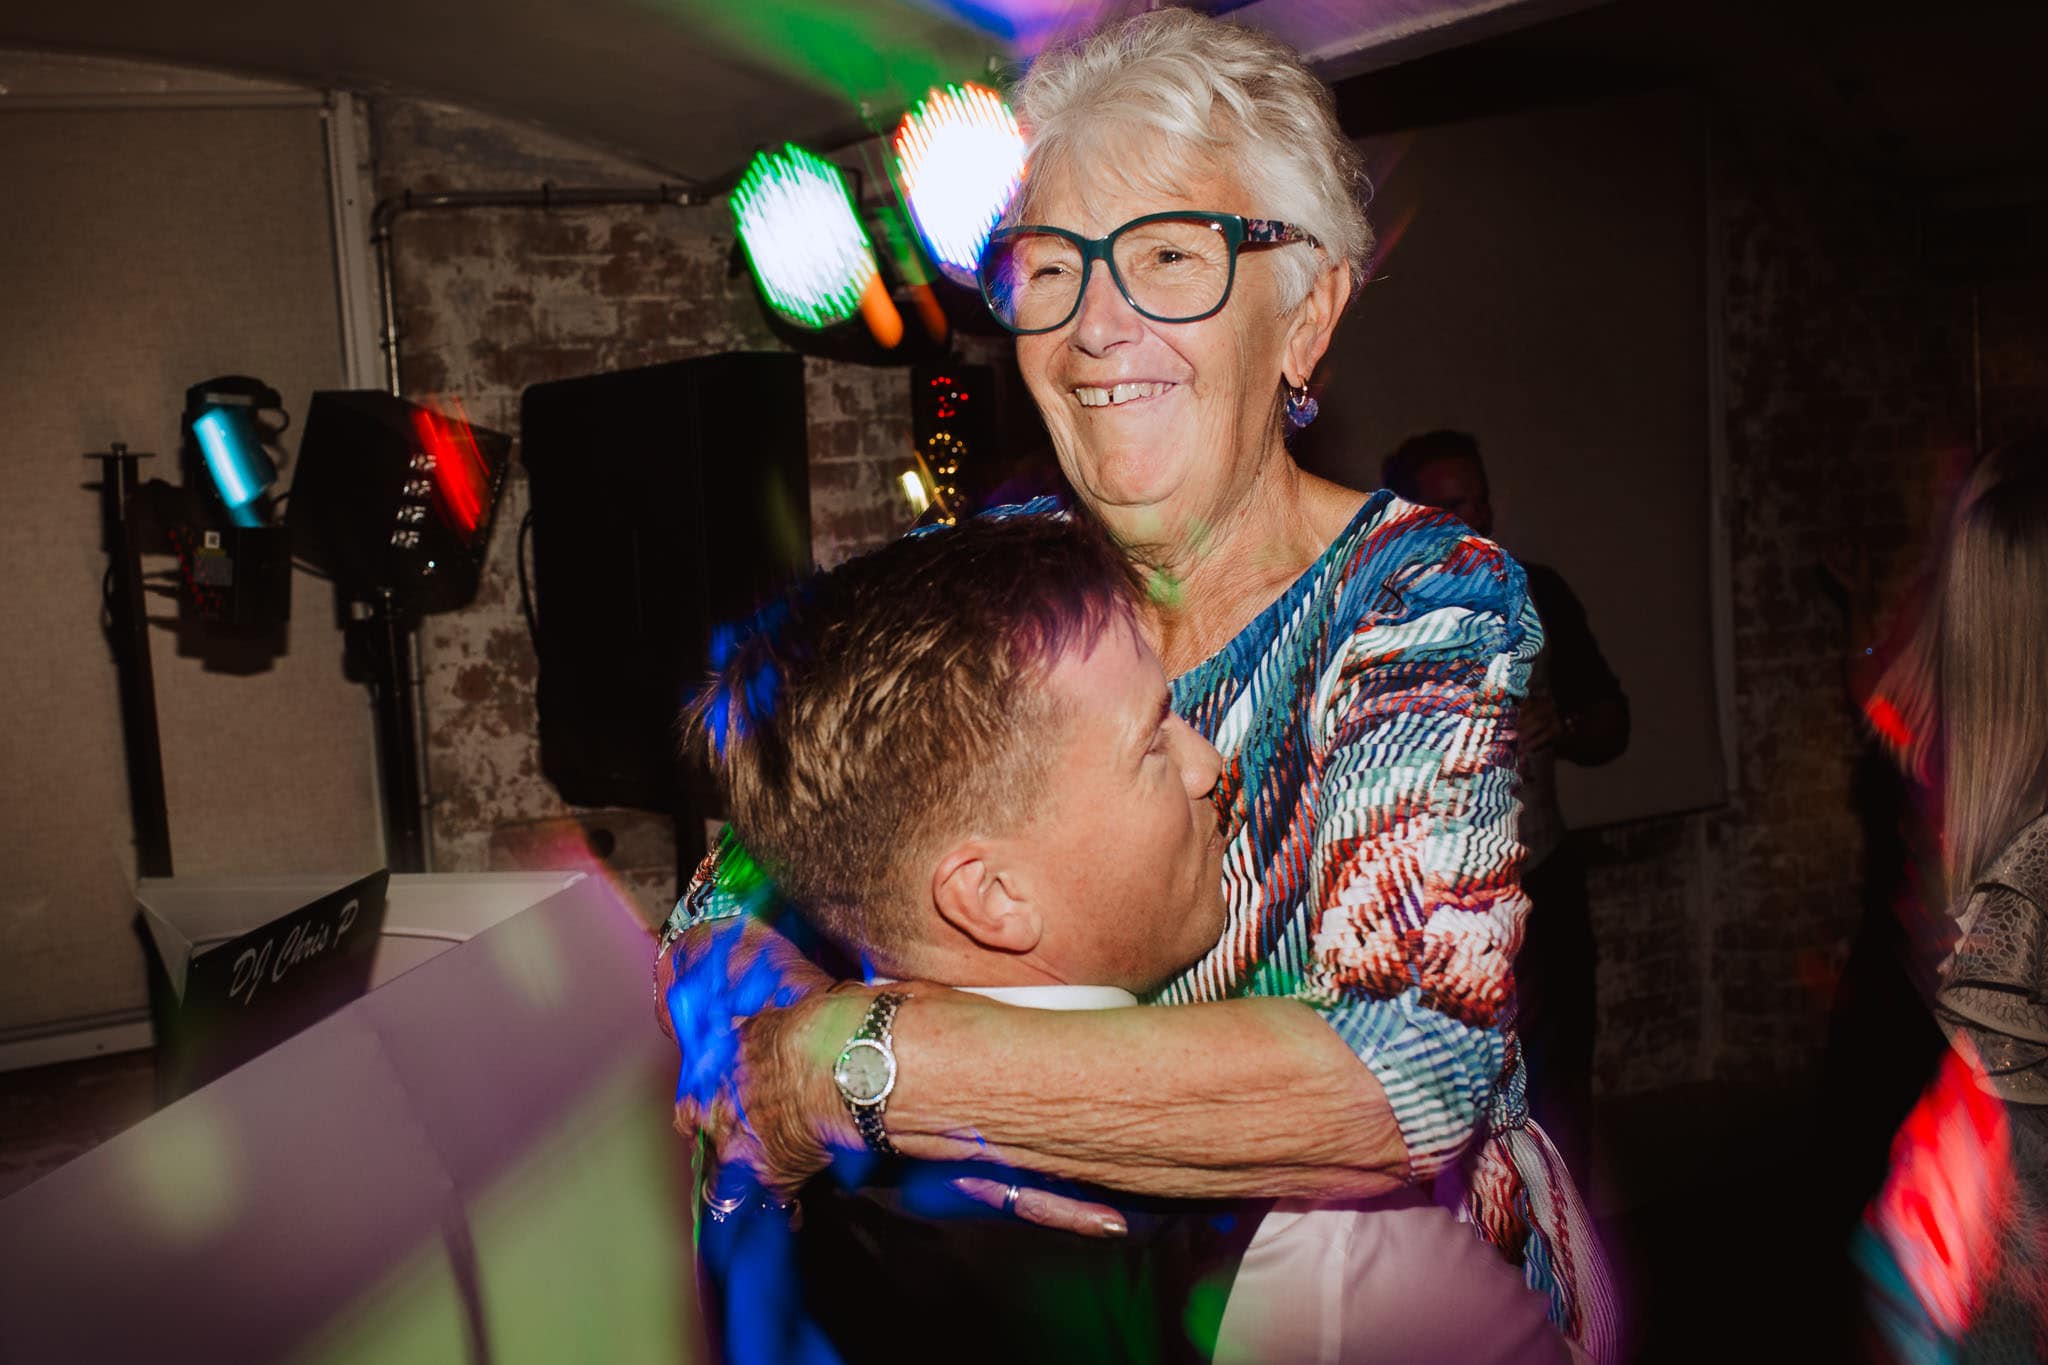 grandma loving the dance floor